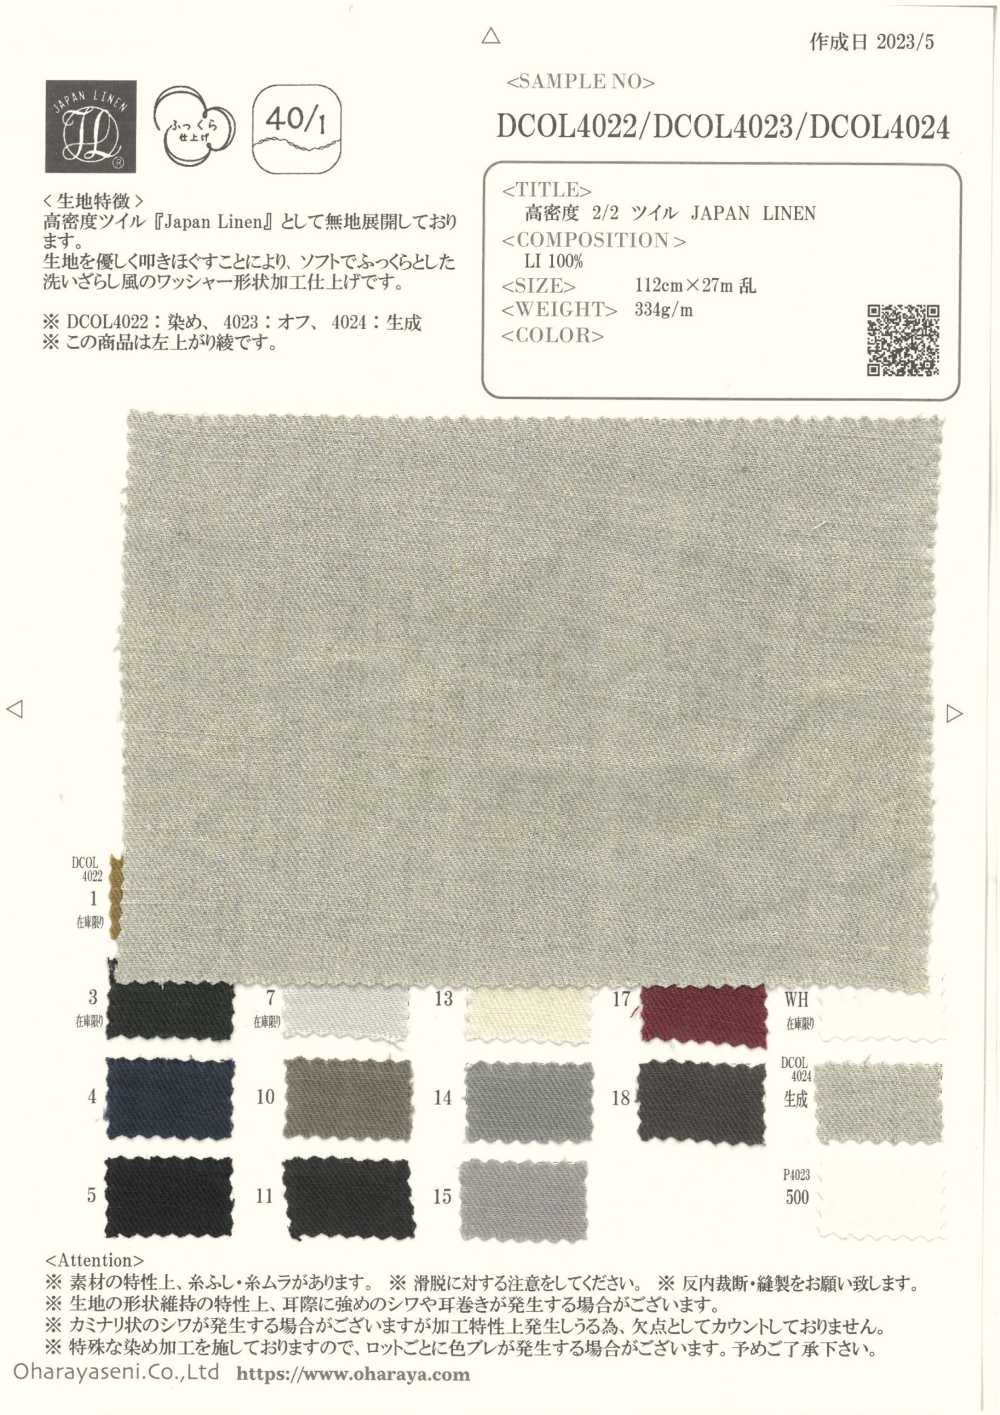 DCOL4023 Sarga 2/2 Alta Densidad LINO JAPÓN[Fabrica Textil] Oharayaseni